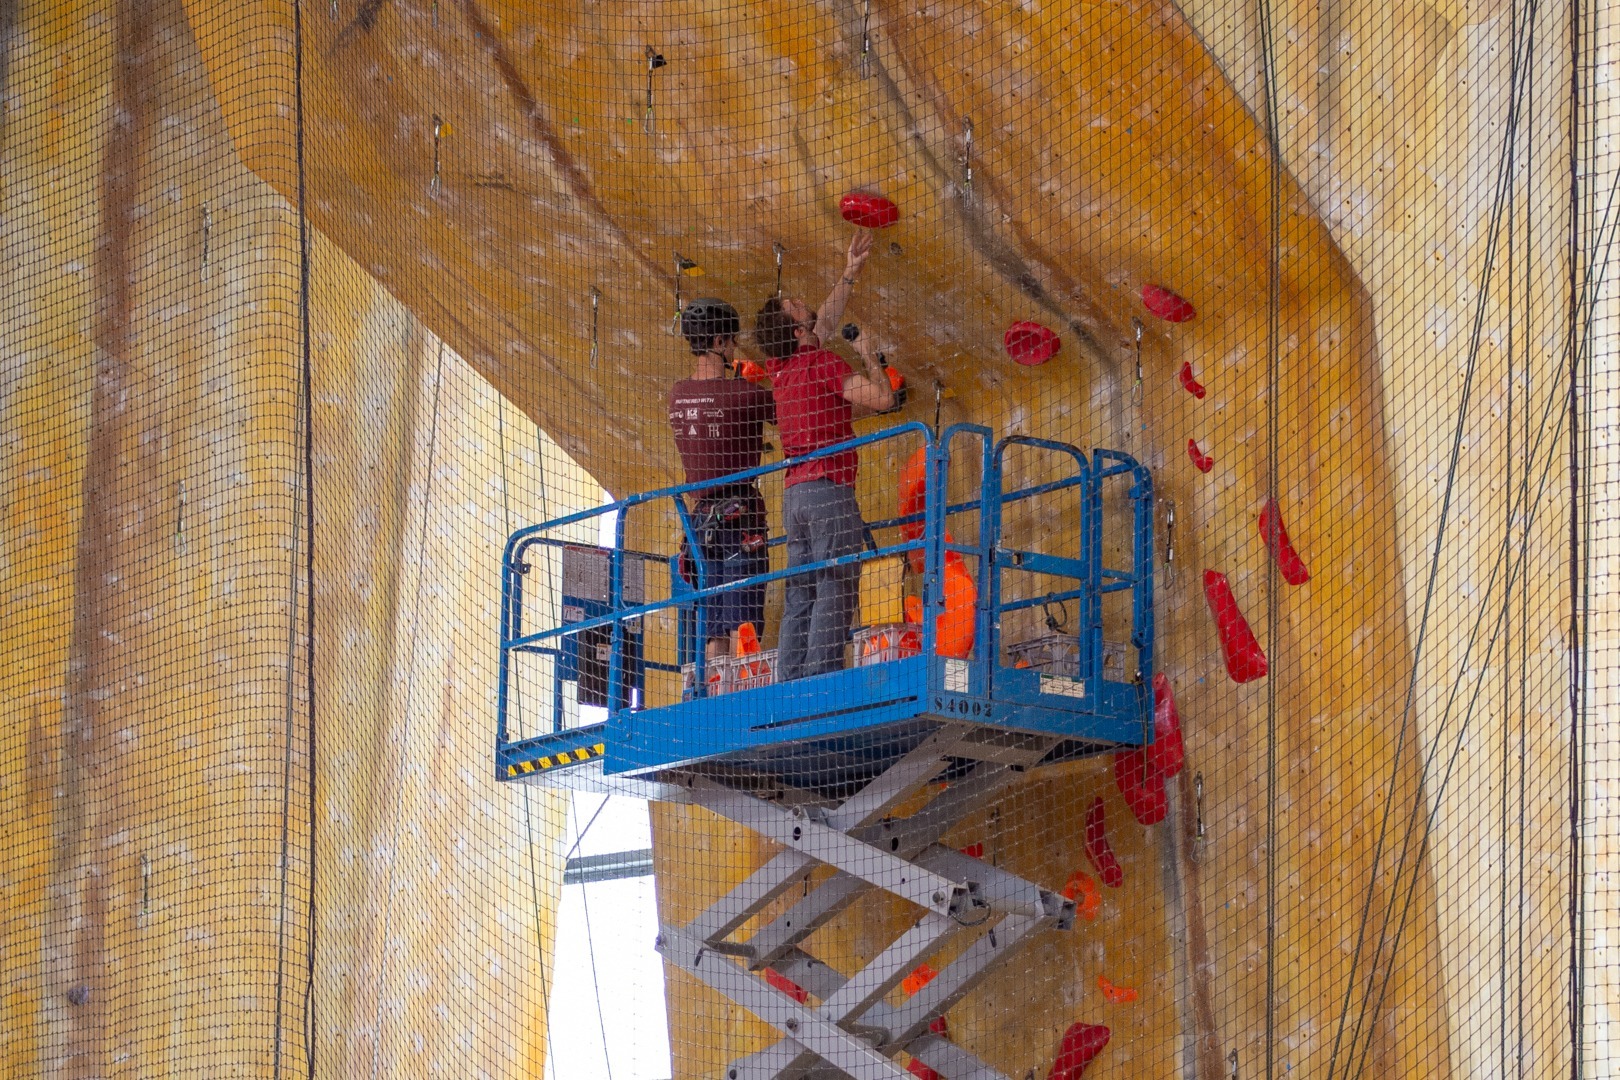 Two people setting a leading climbing wall using a scissor lift machine.